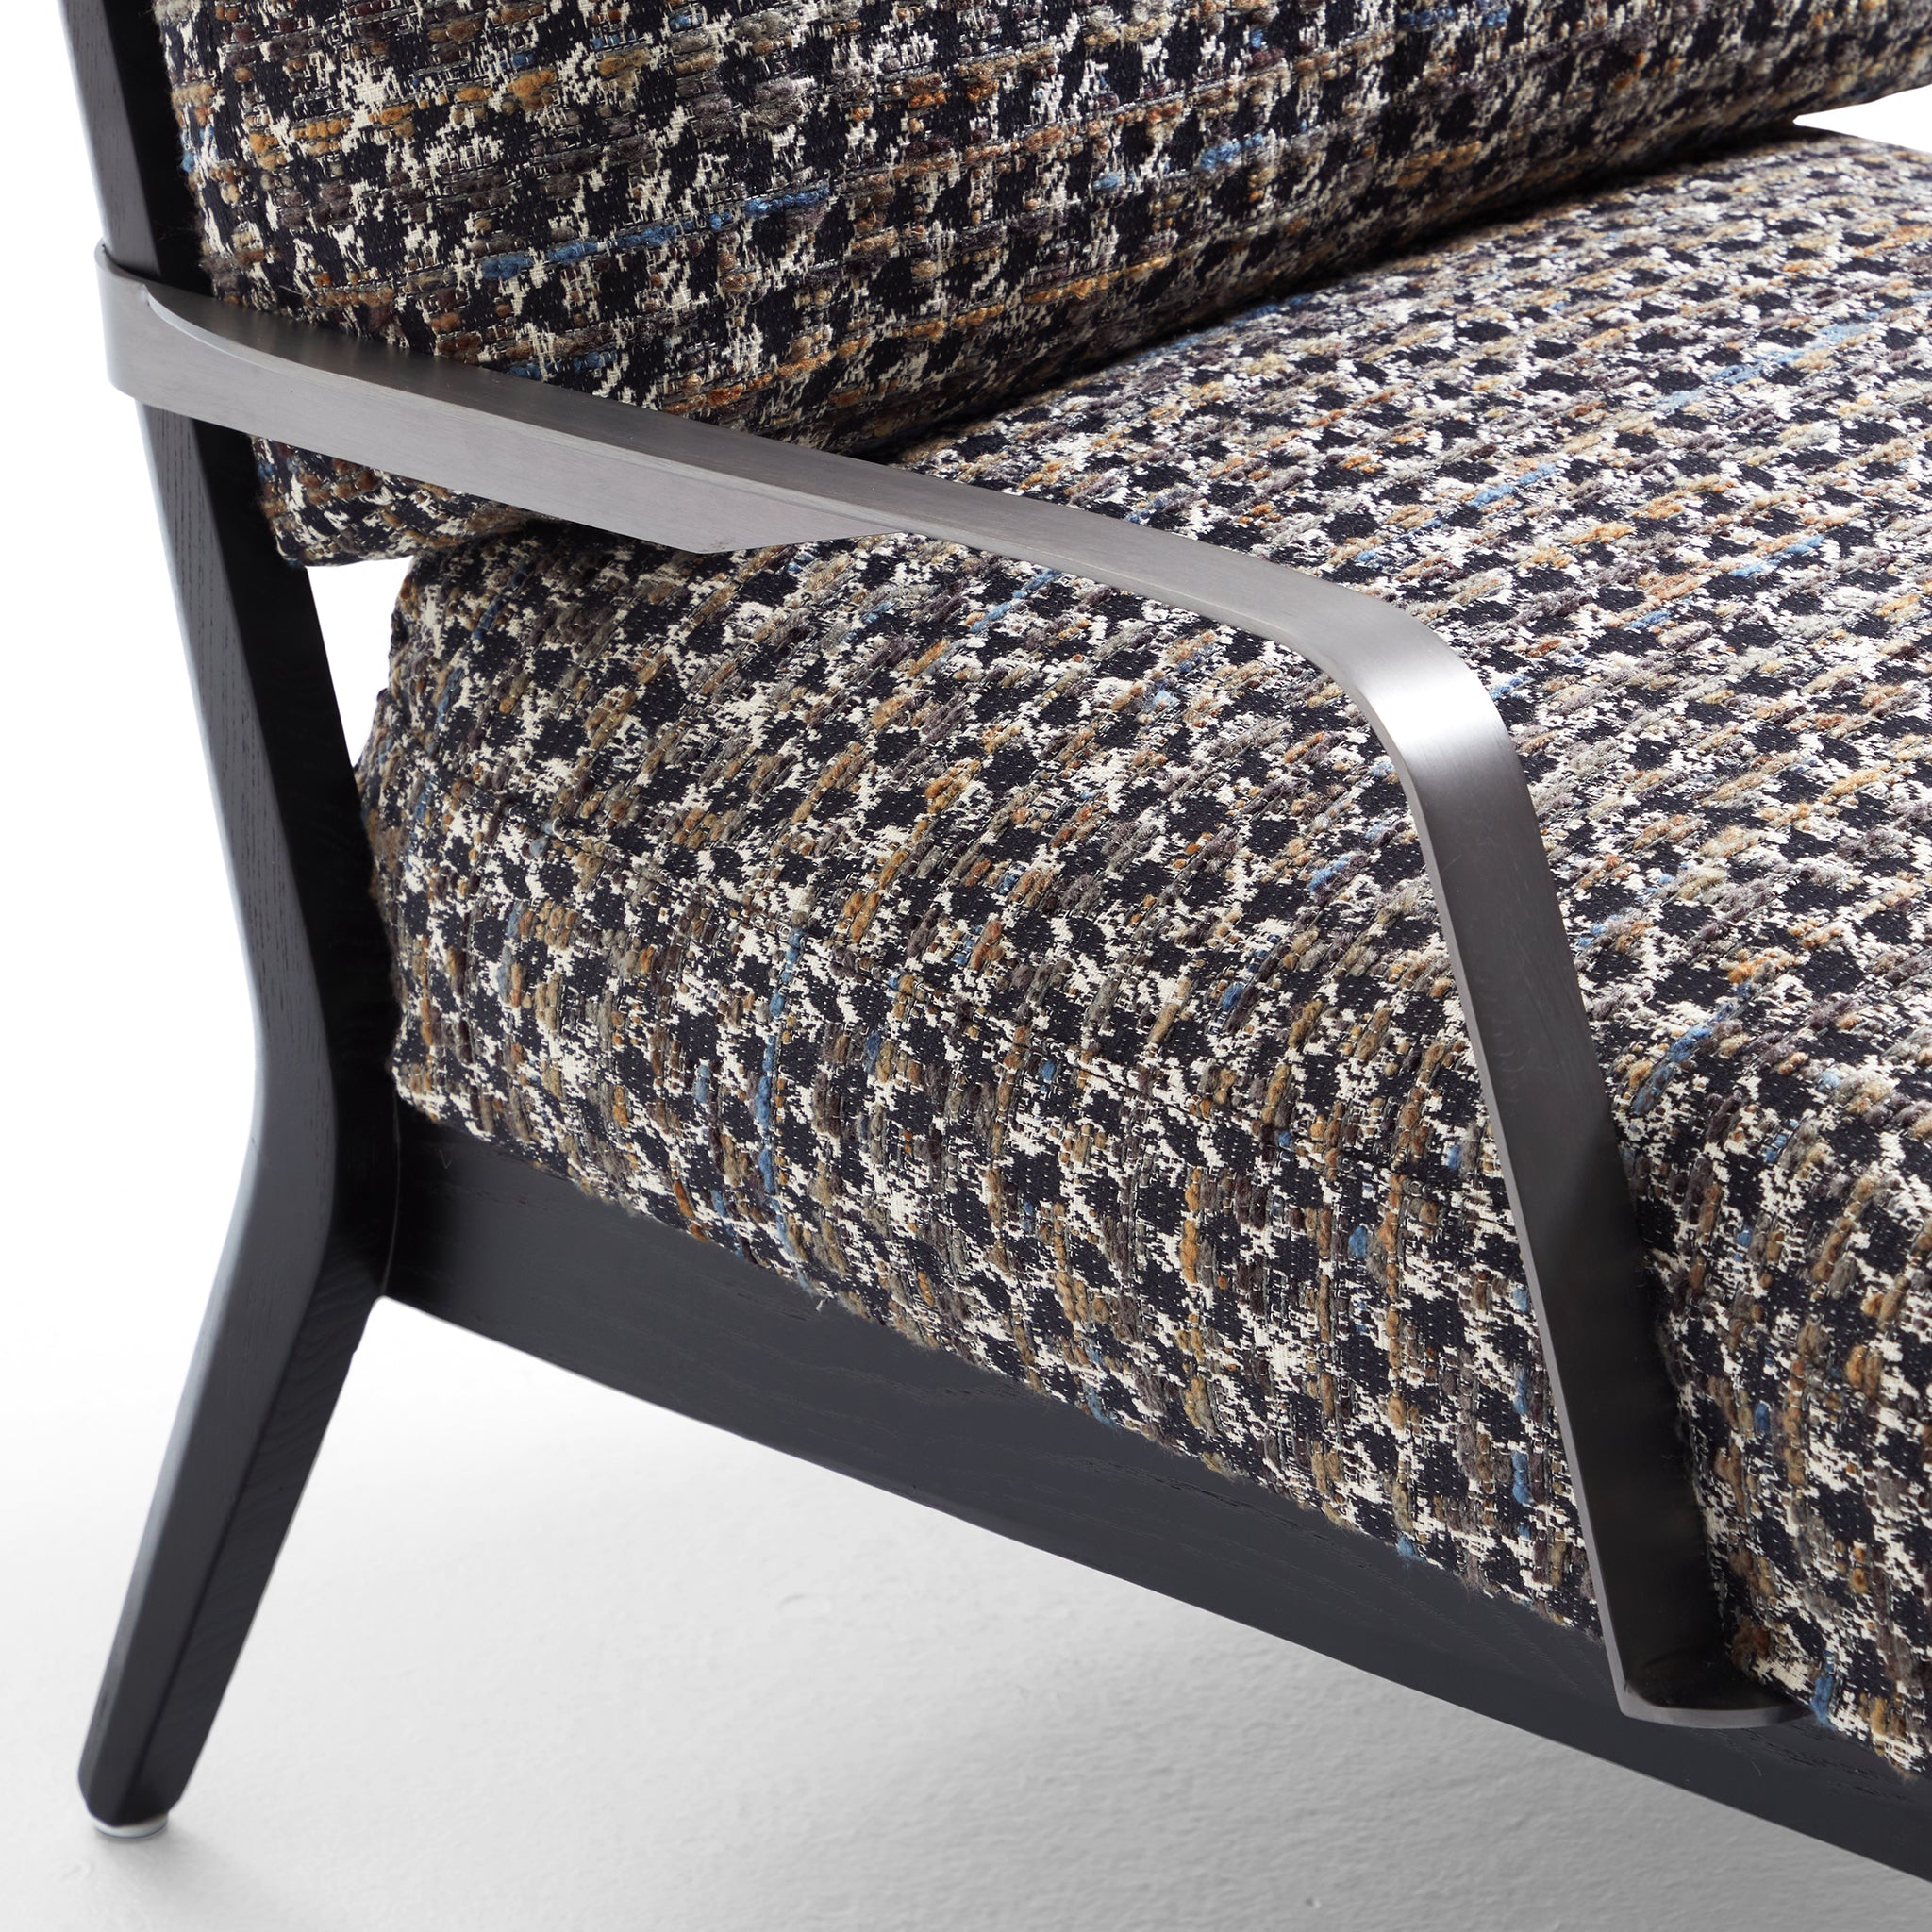 Charcoal Gary Flax Linen Minimalist Leisure Chair